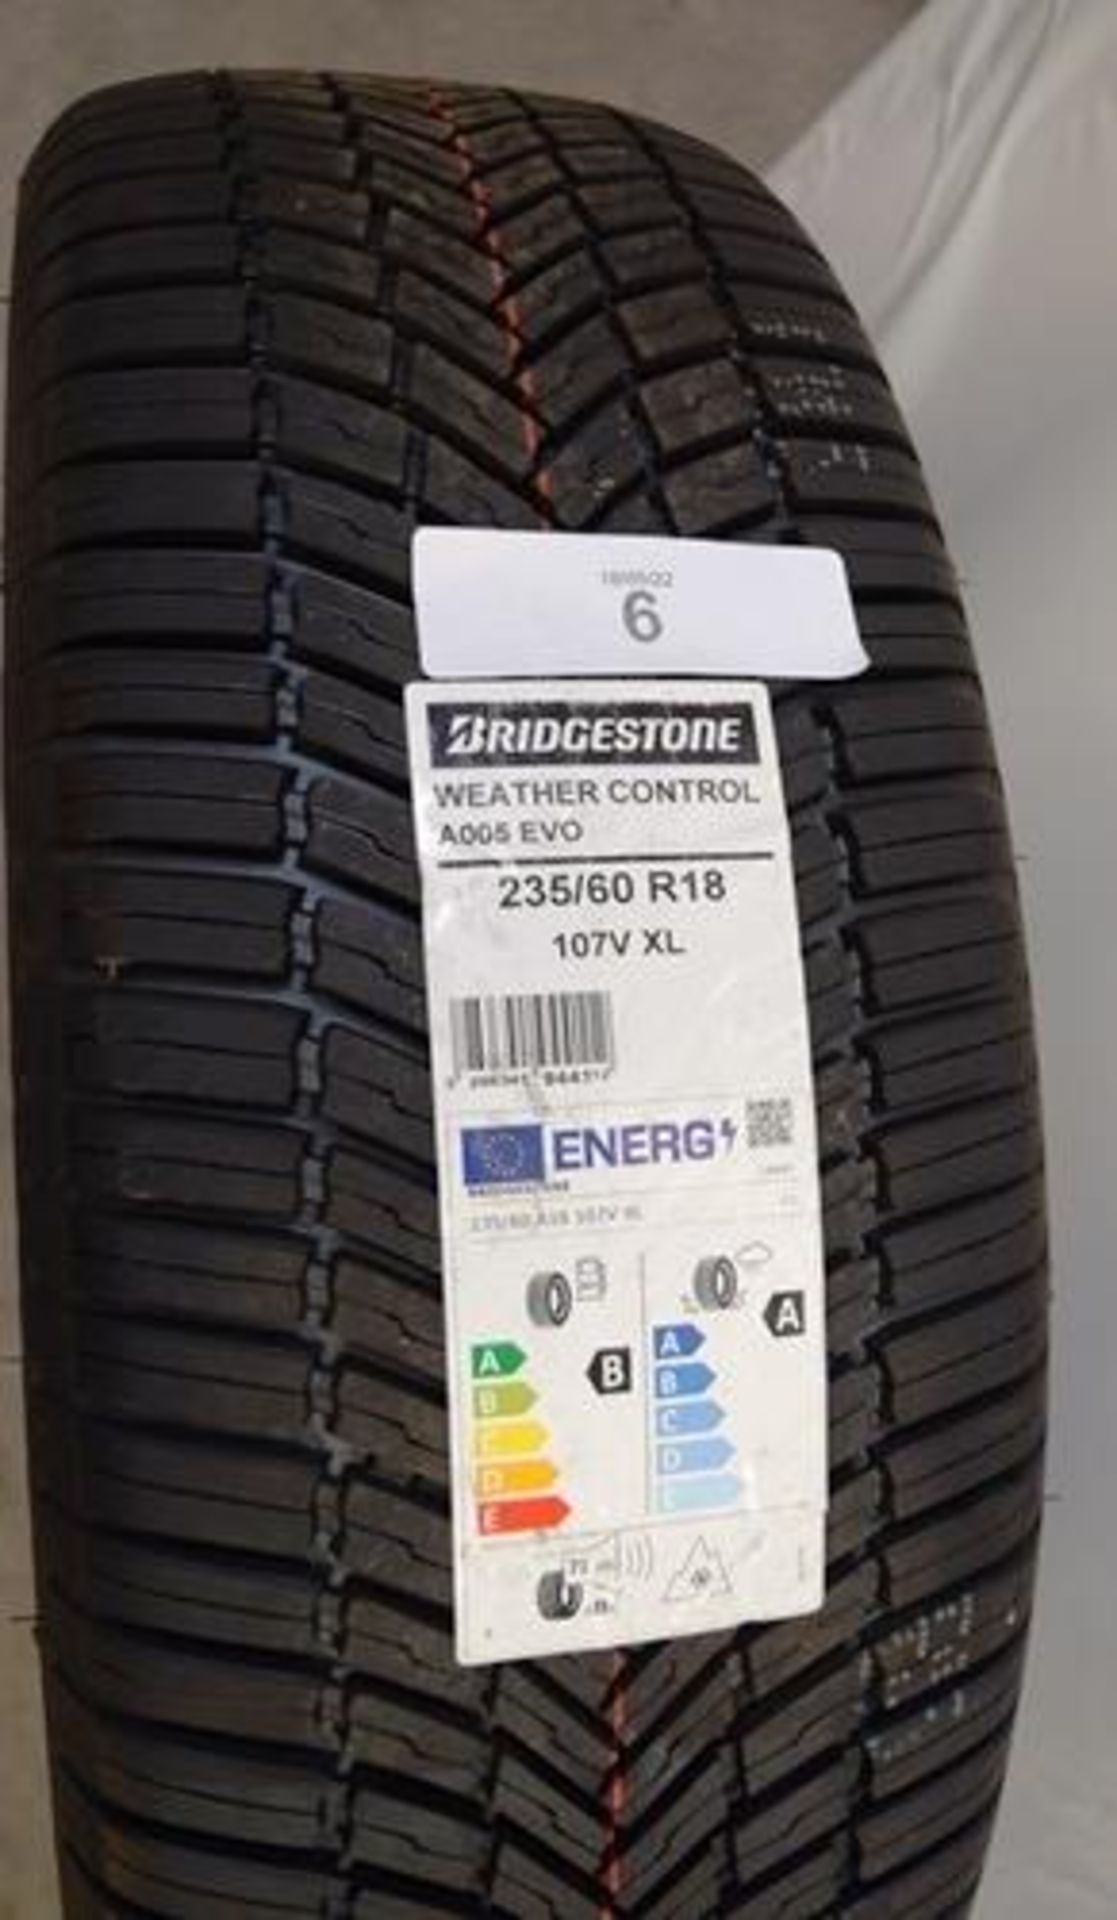 1 x Bridgestone Weather Control A005 Evo tyre, size 235/60 R18 107V XL - New with label (GS1) - Image 2 of 2